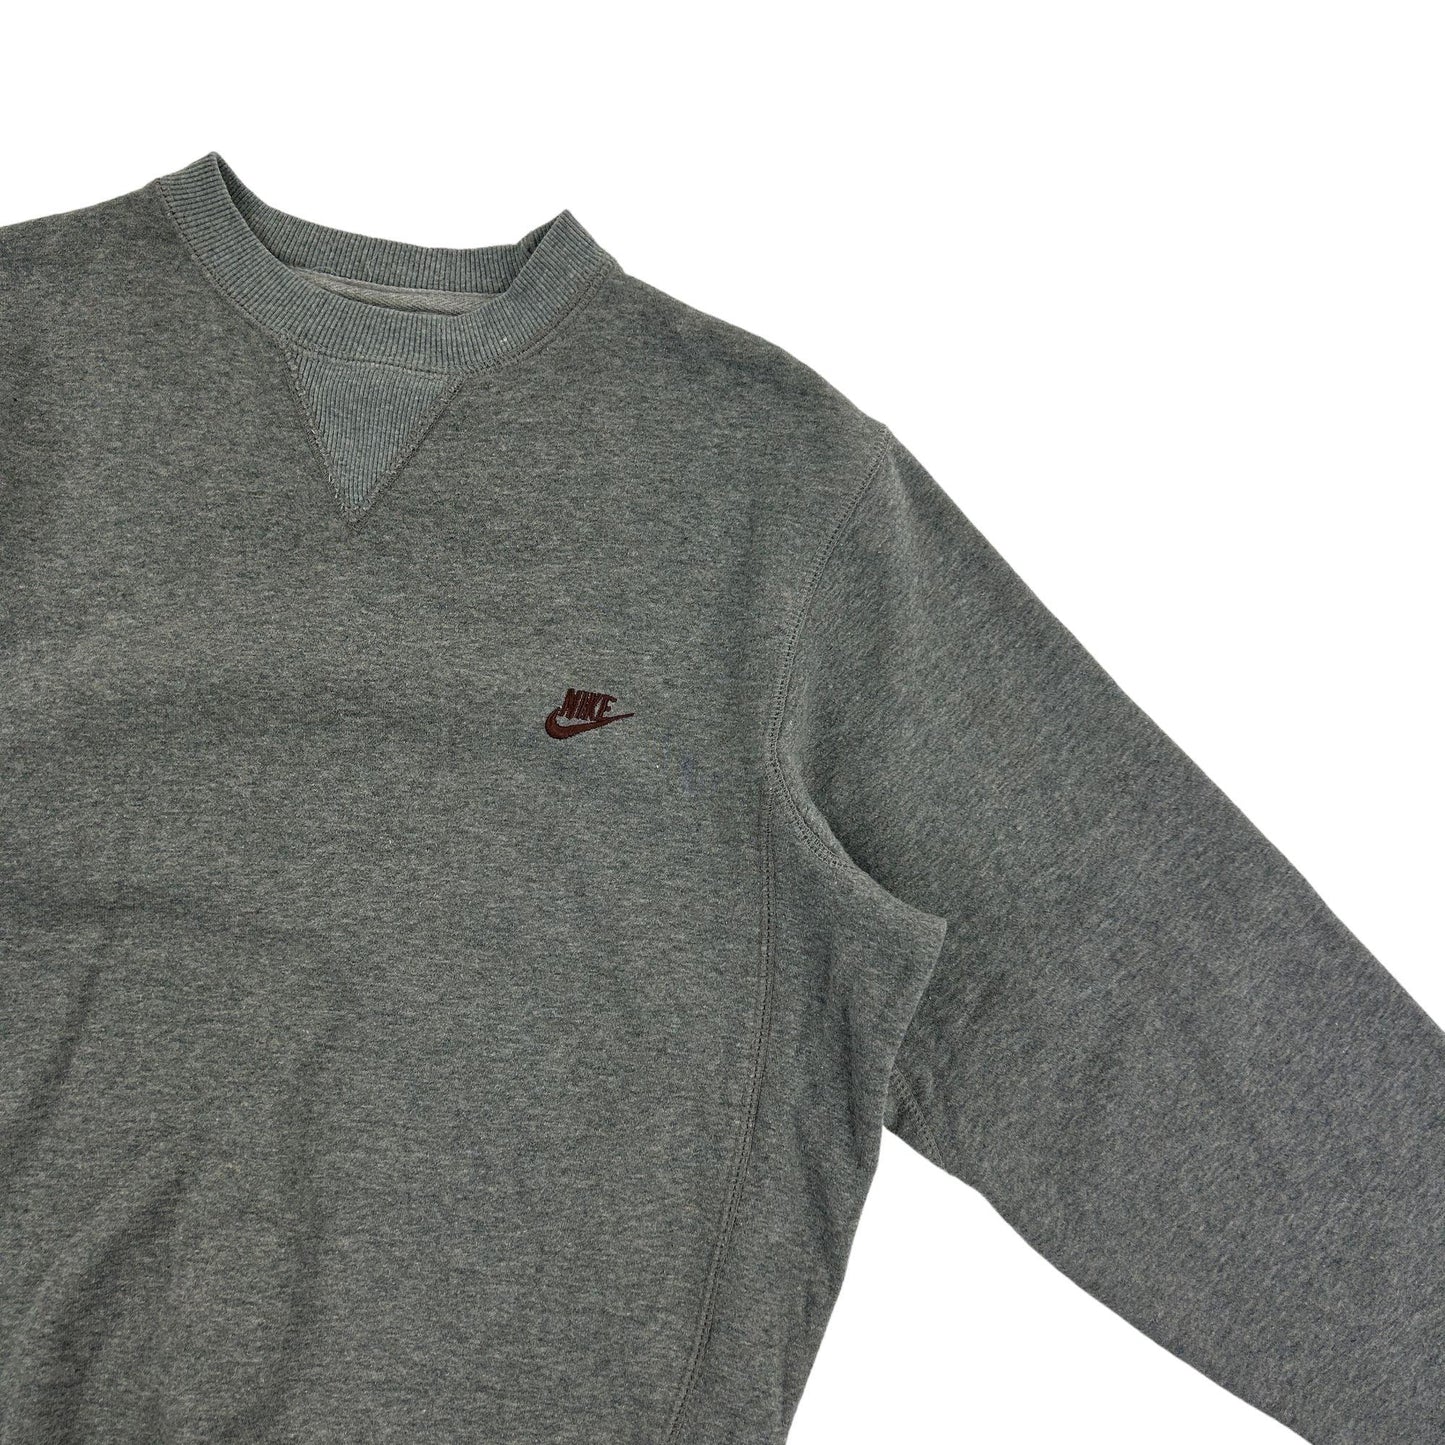 Vintage Nike Sweatshirt Size S - Known Source